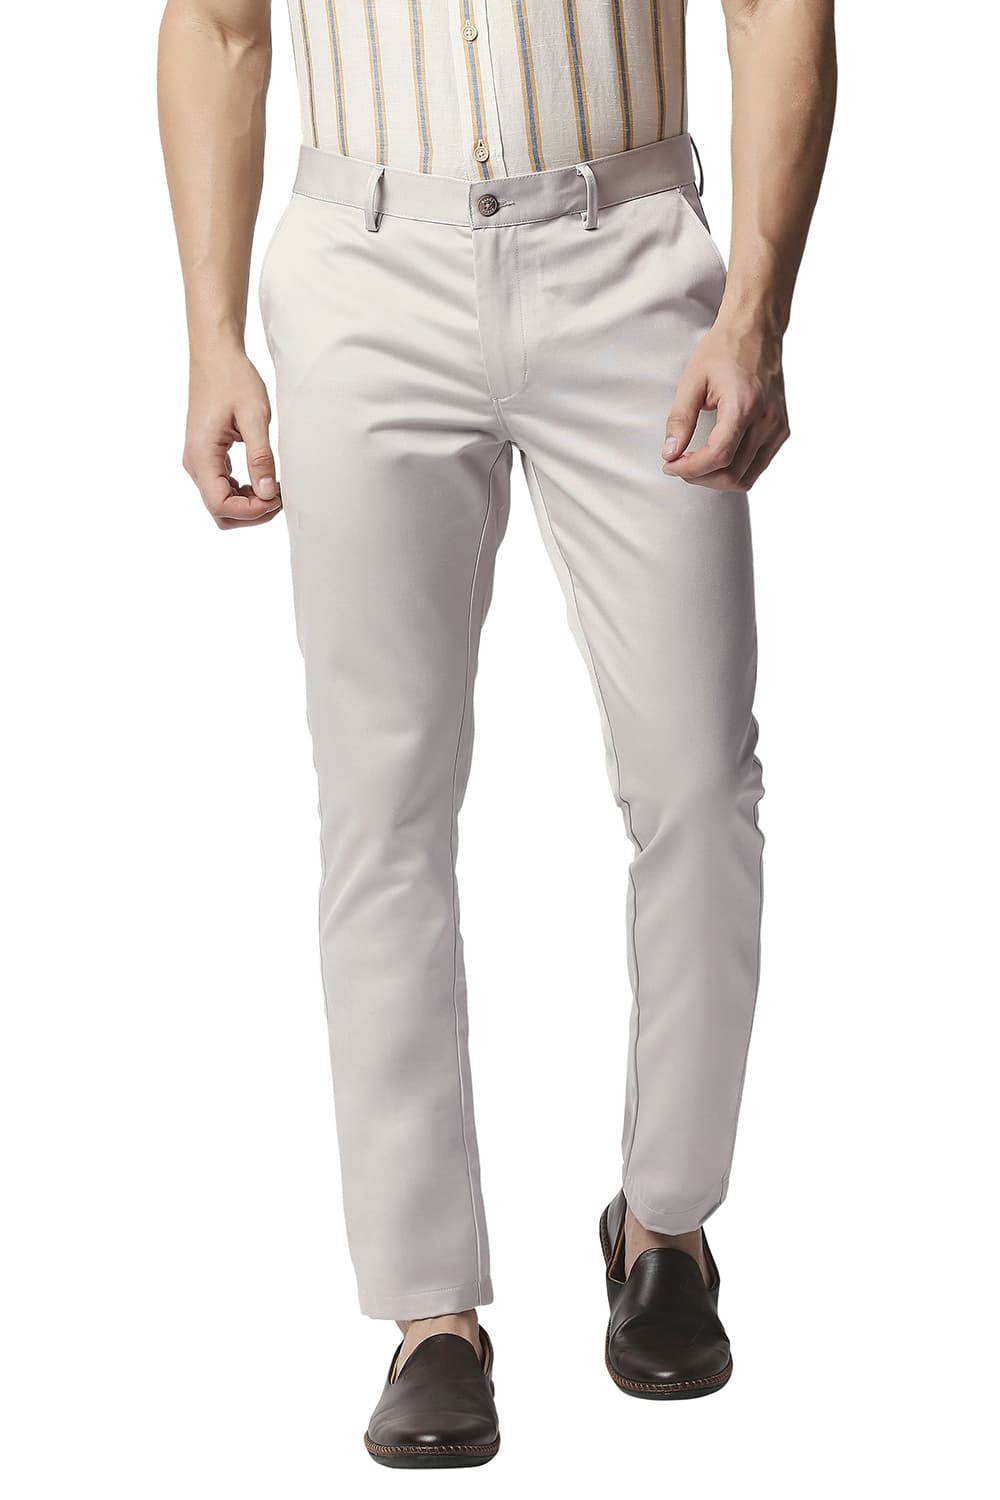 Basics | Basics Tapered Fit Light Grey Satin Trousers